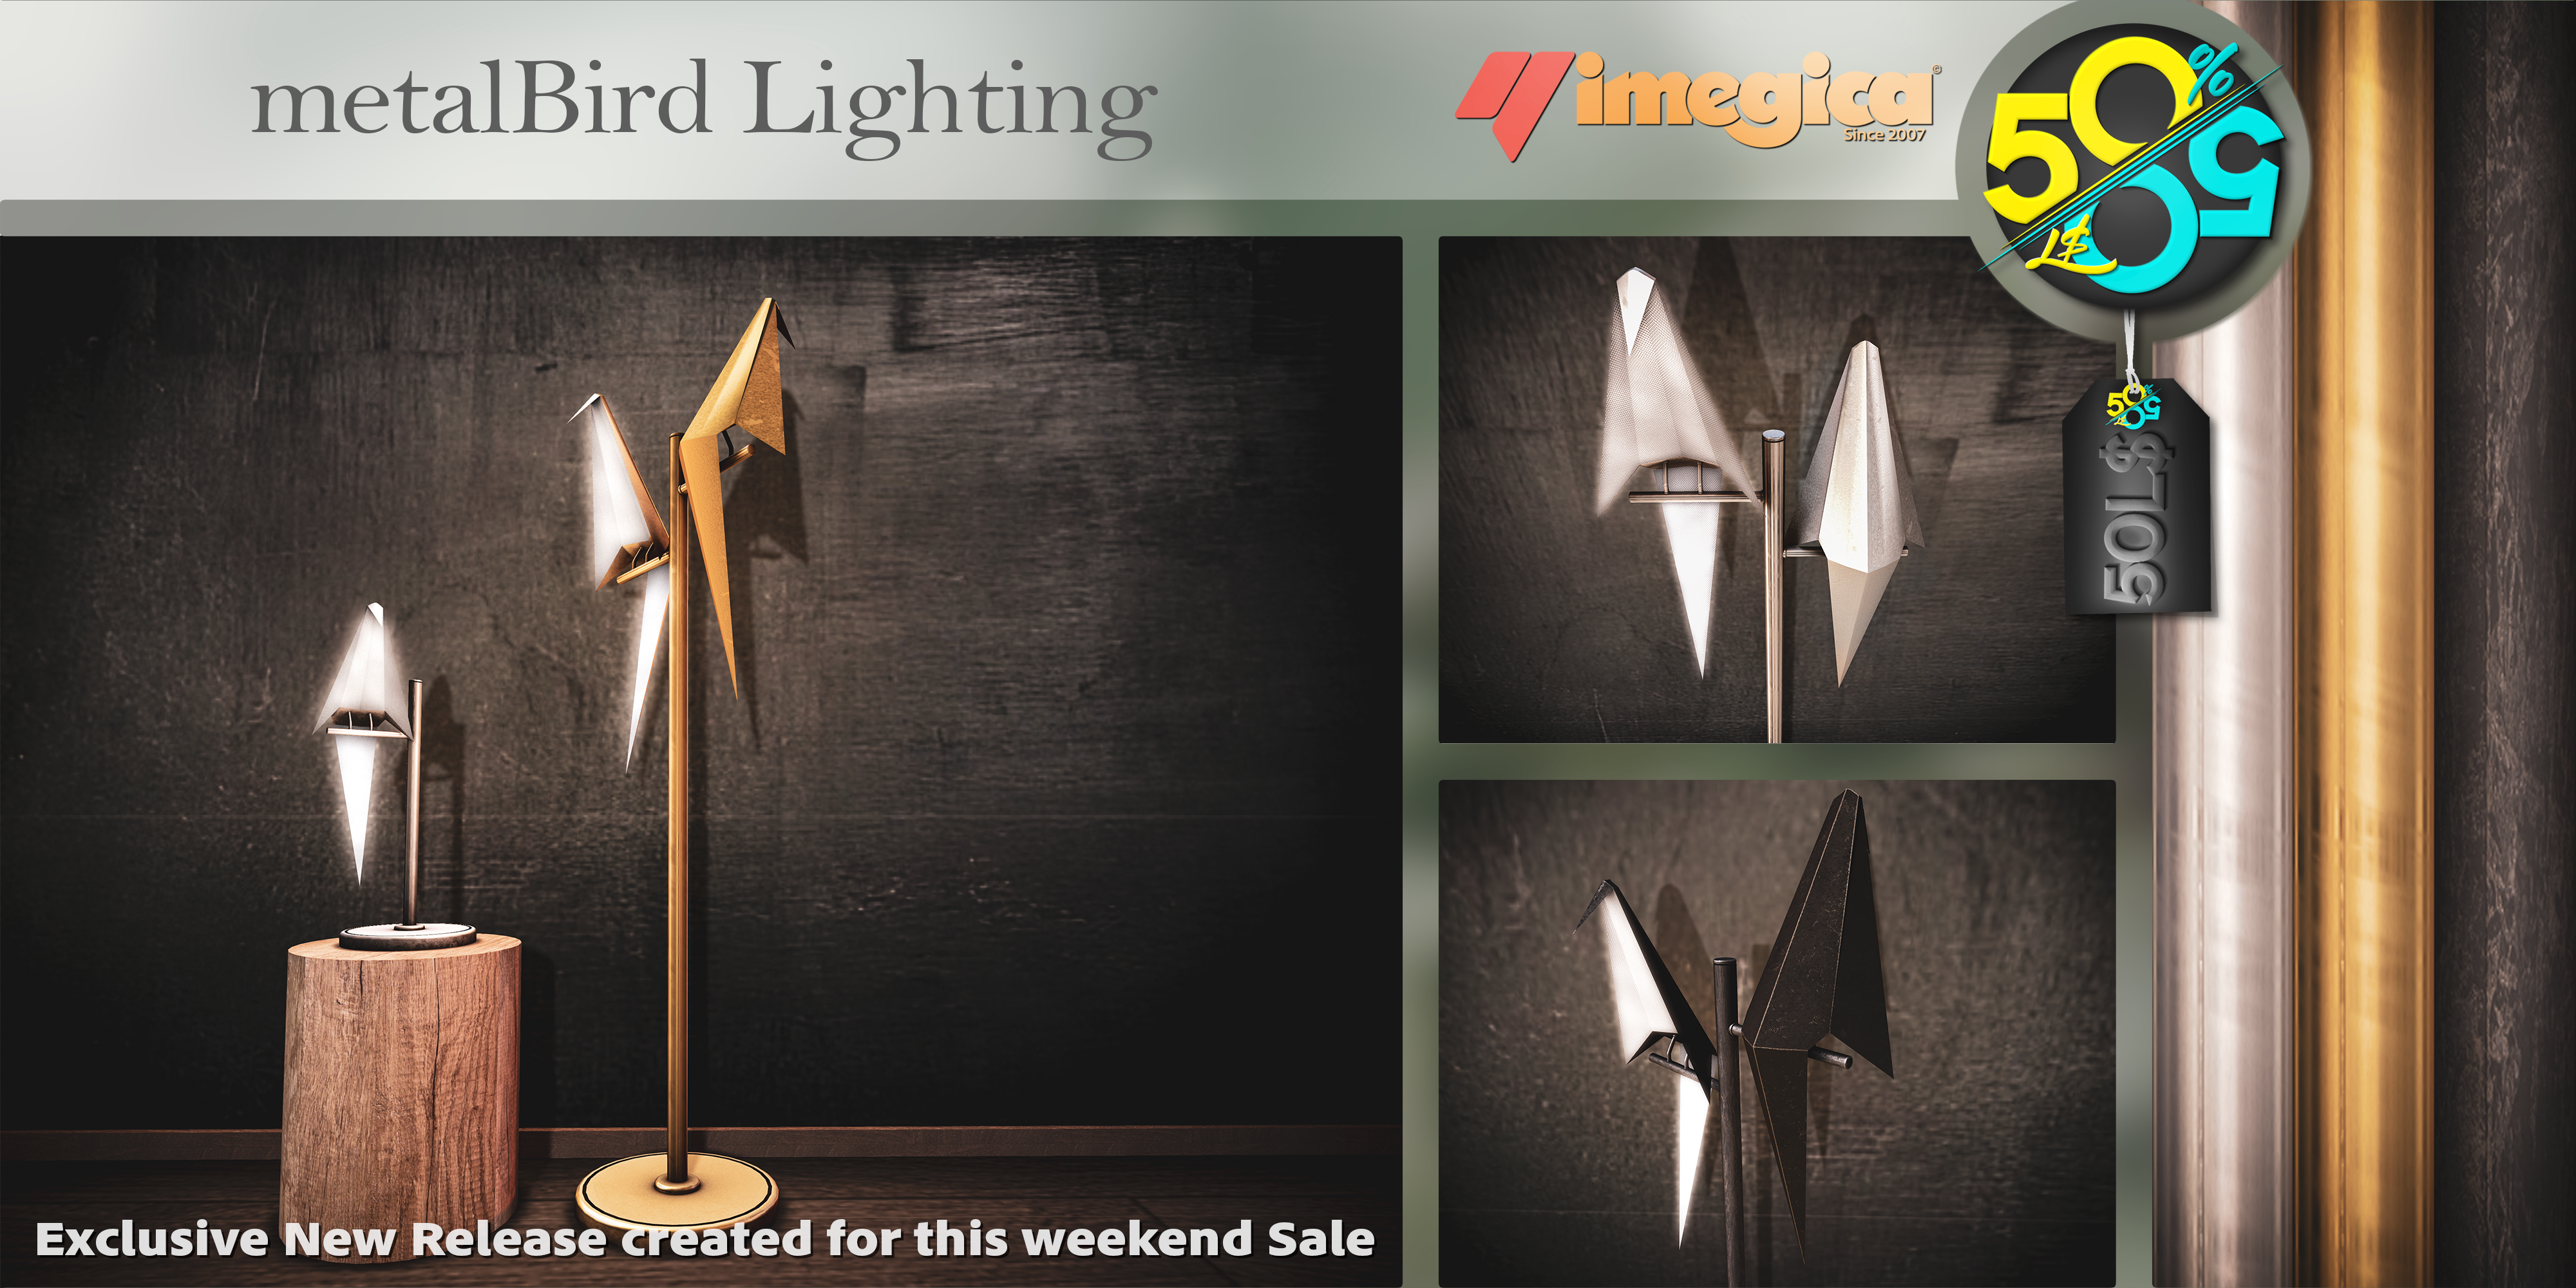 Imegica – Metalbird Lighting